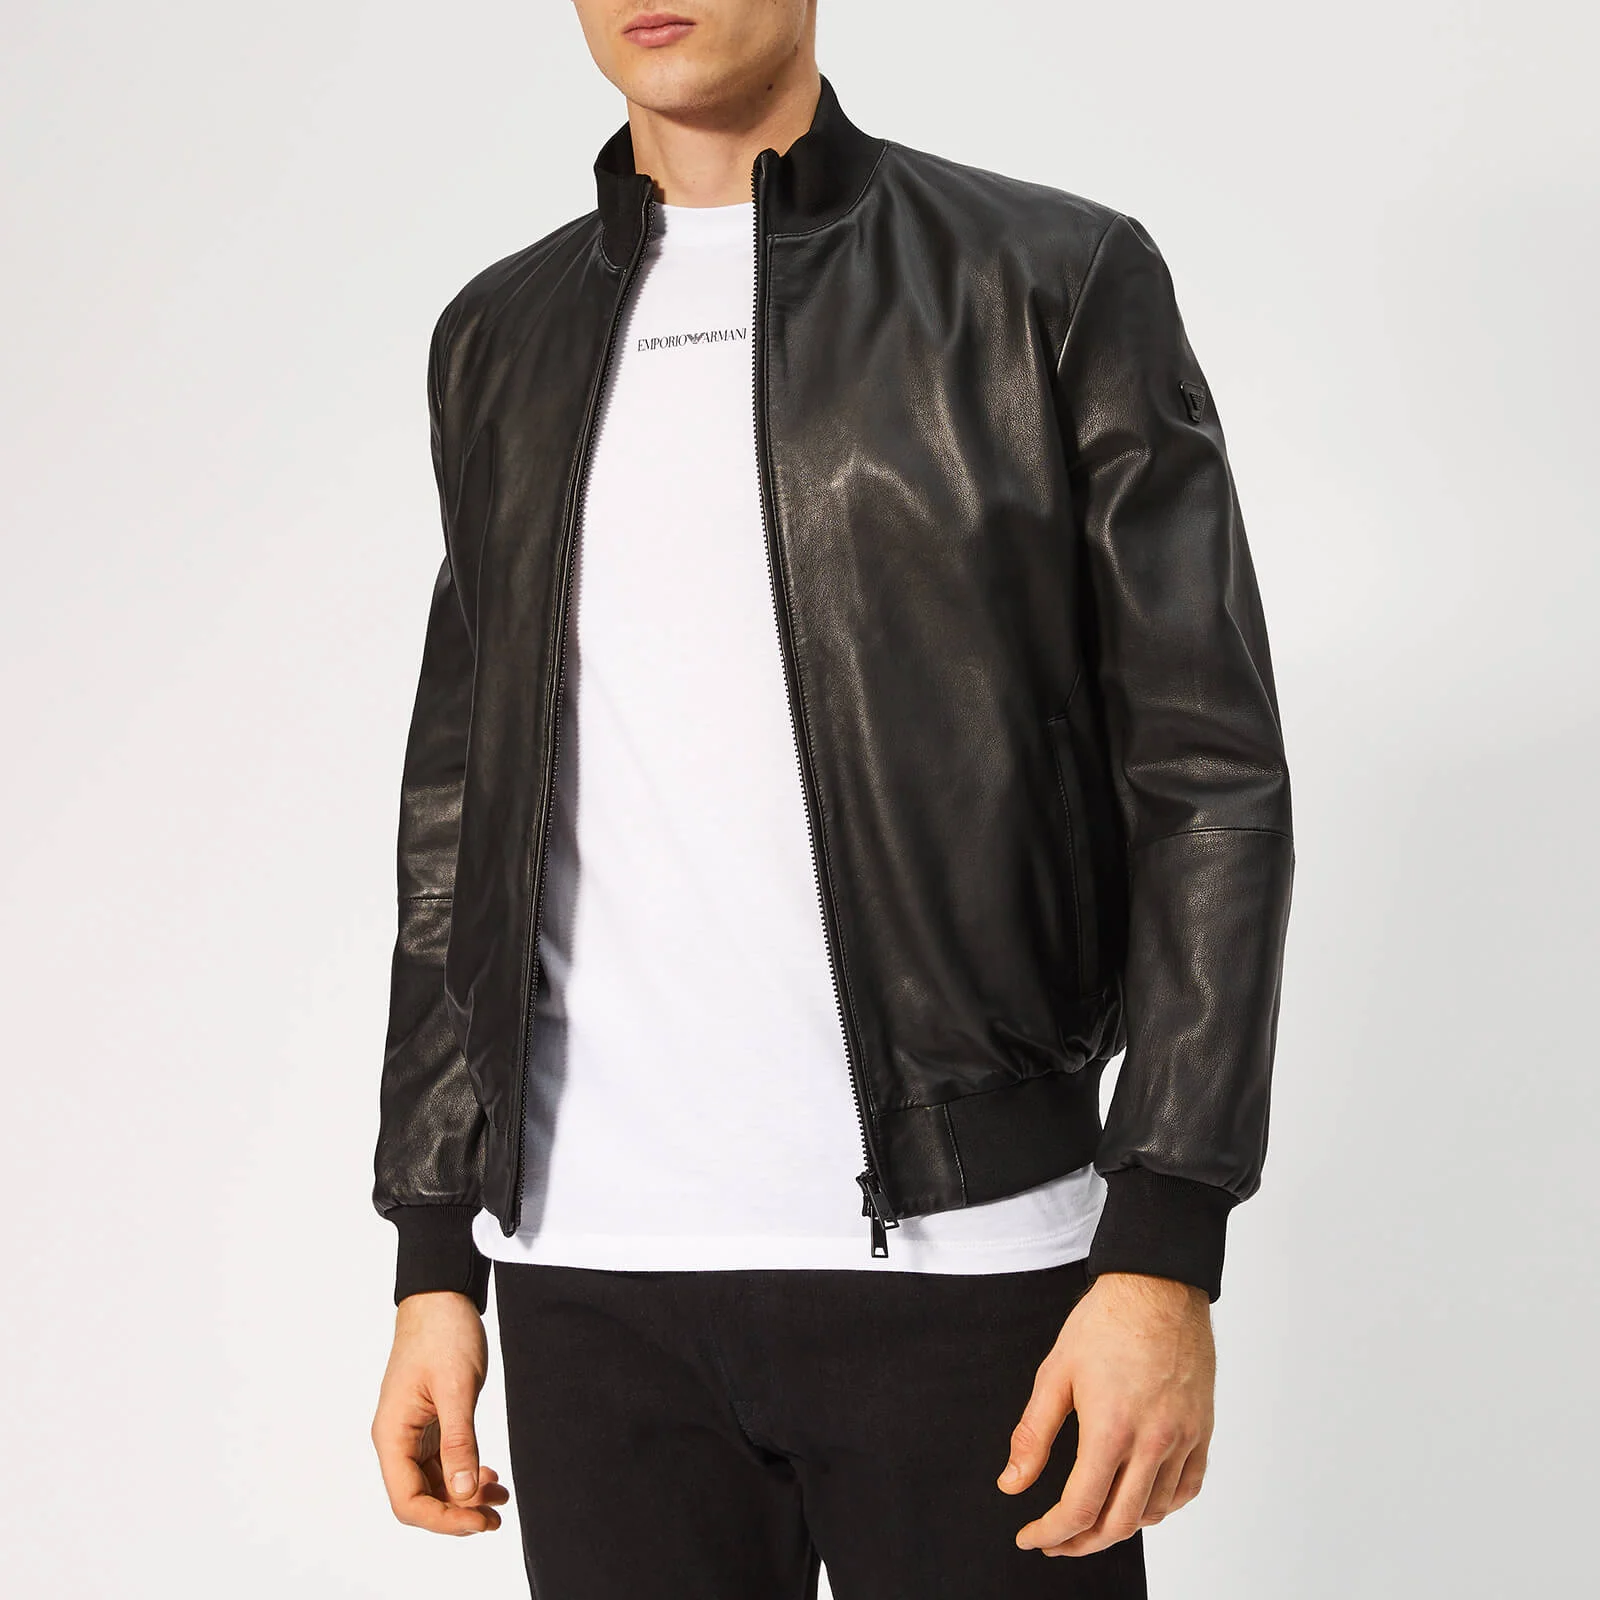 Emporio Armani Men's Leather Jacket - Nero Image 1